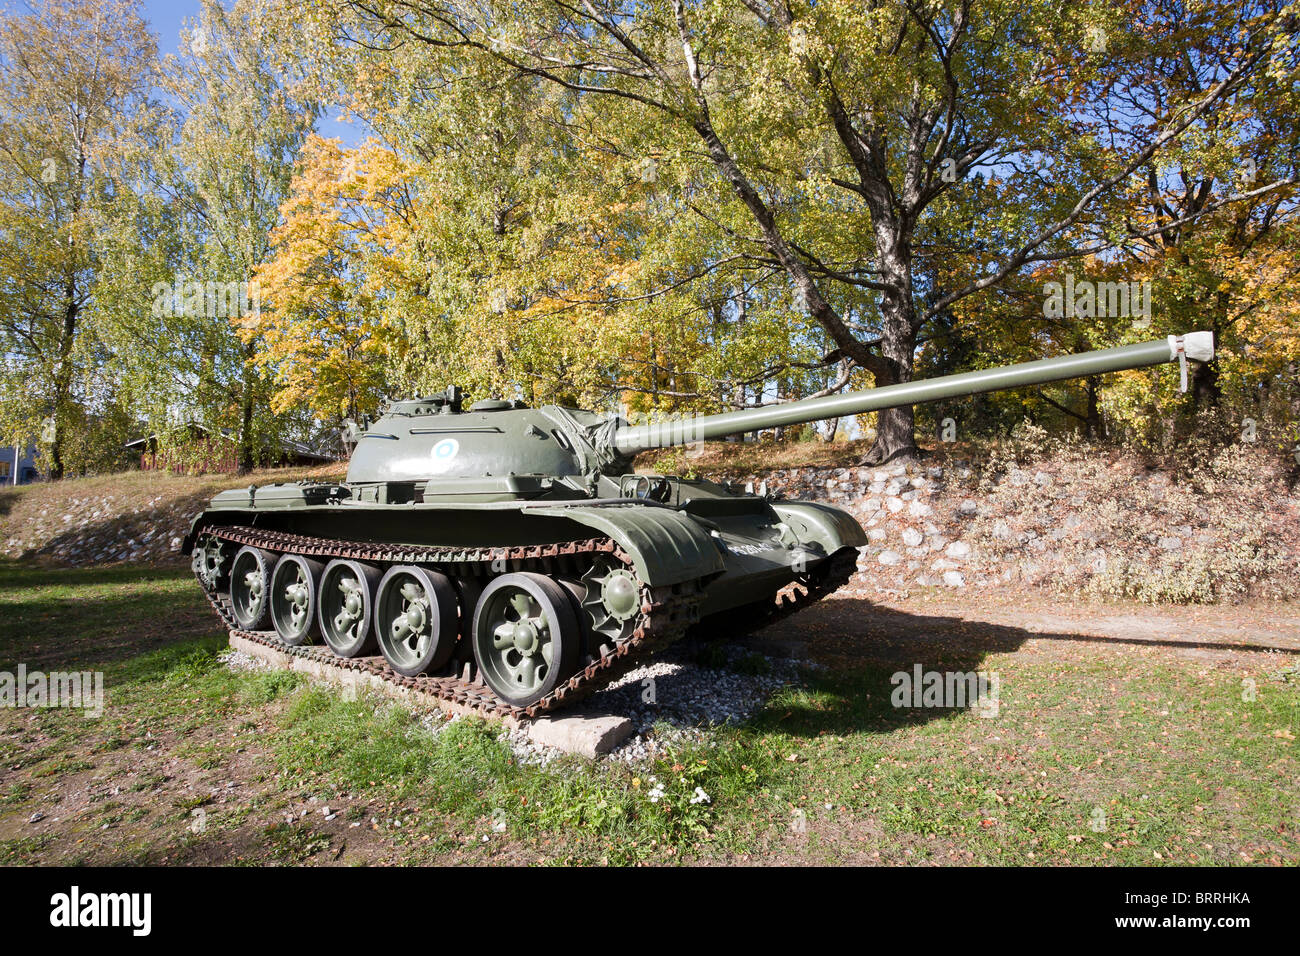 t-54-tank-on-display-in-lappeenranta-finland-BRRHKA.jpg